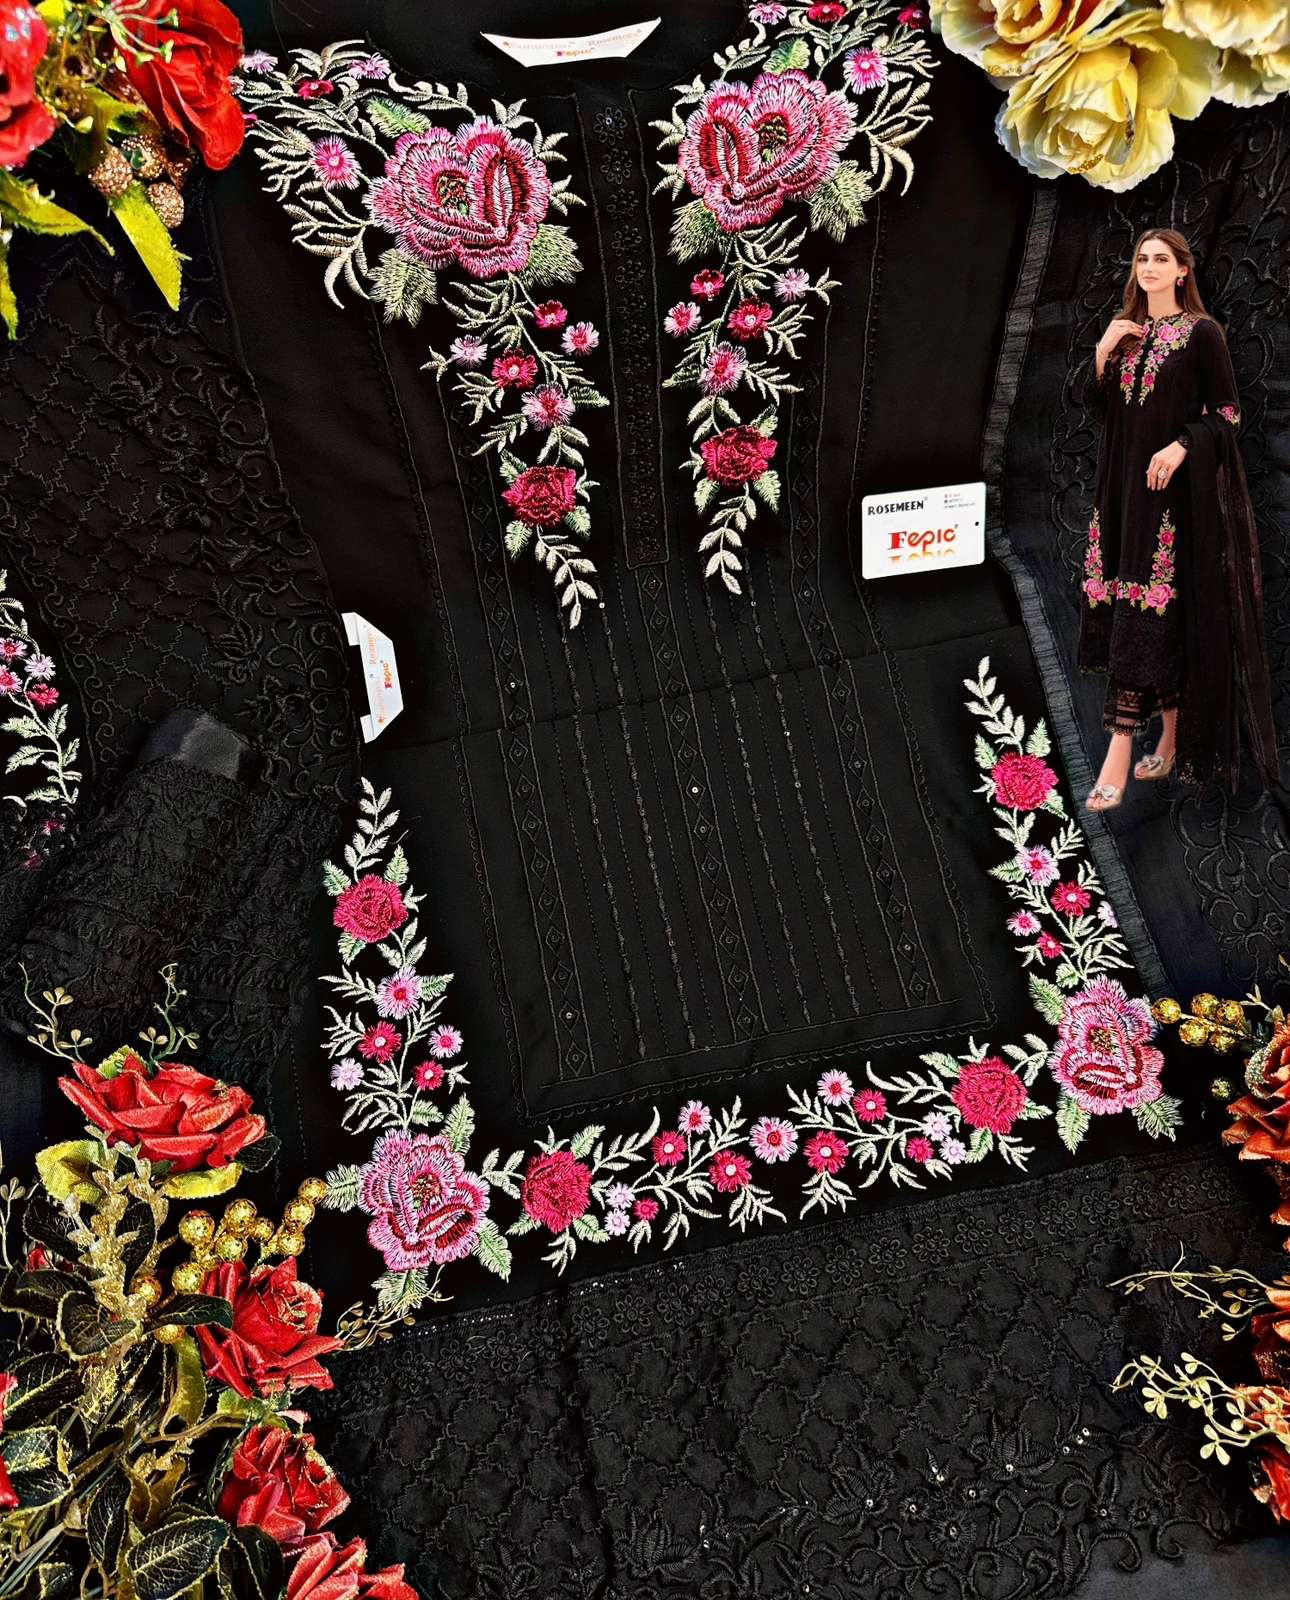 fepic 5406 series stylish look designer pakisatni salwar kameez online supplier surat